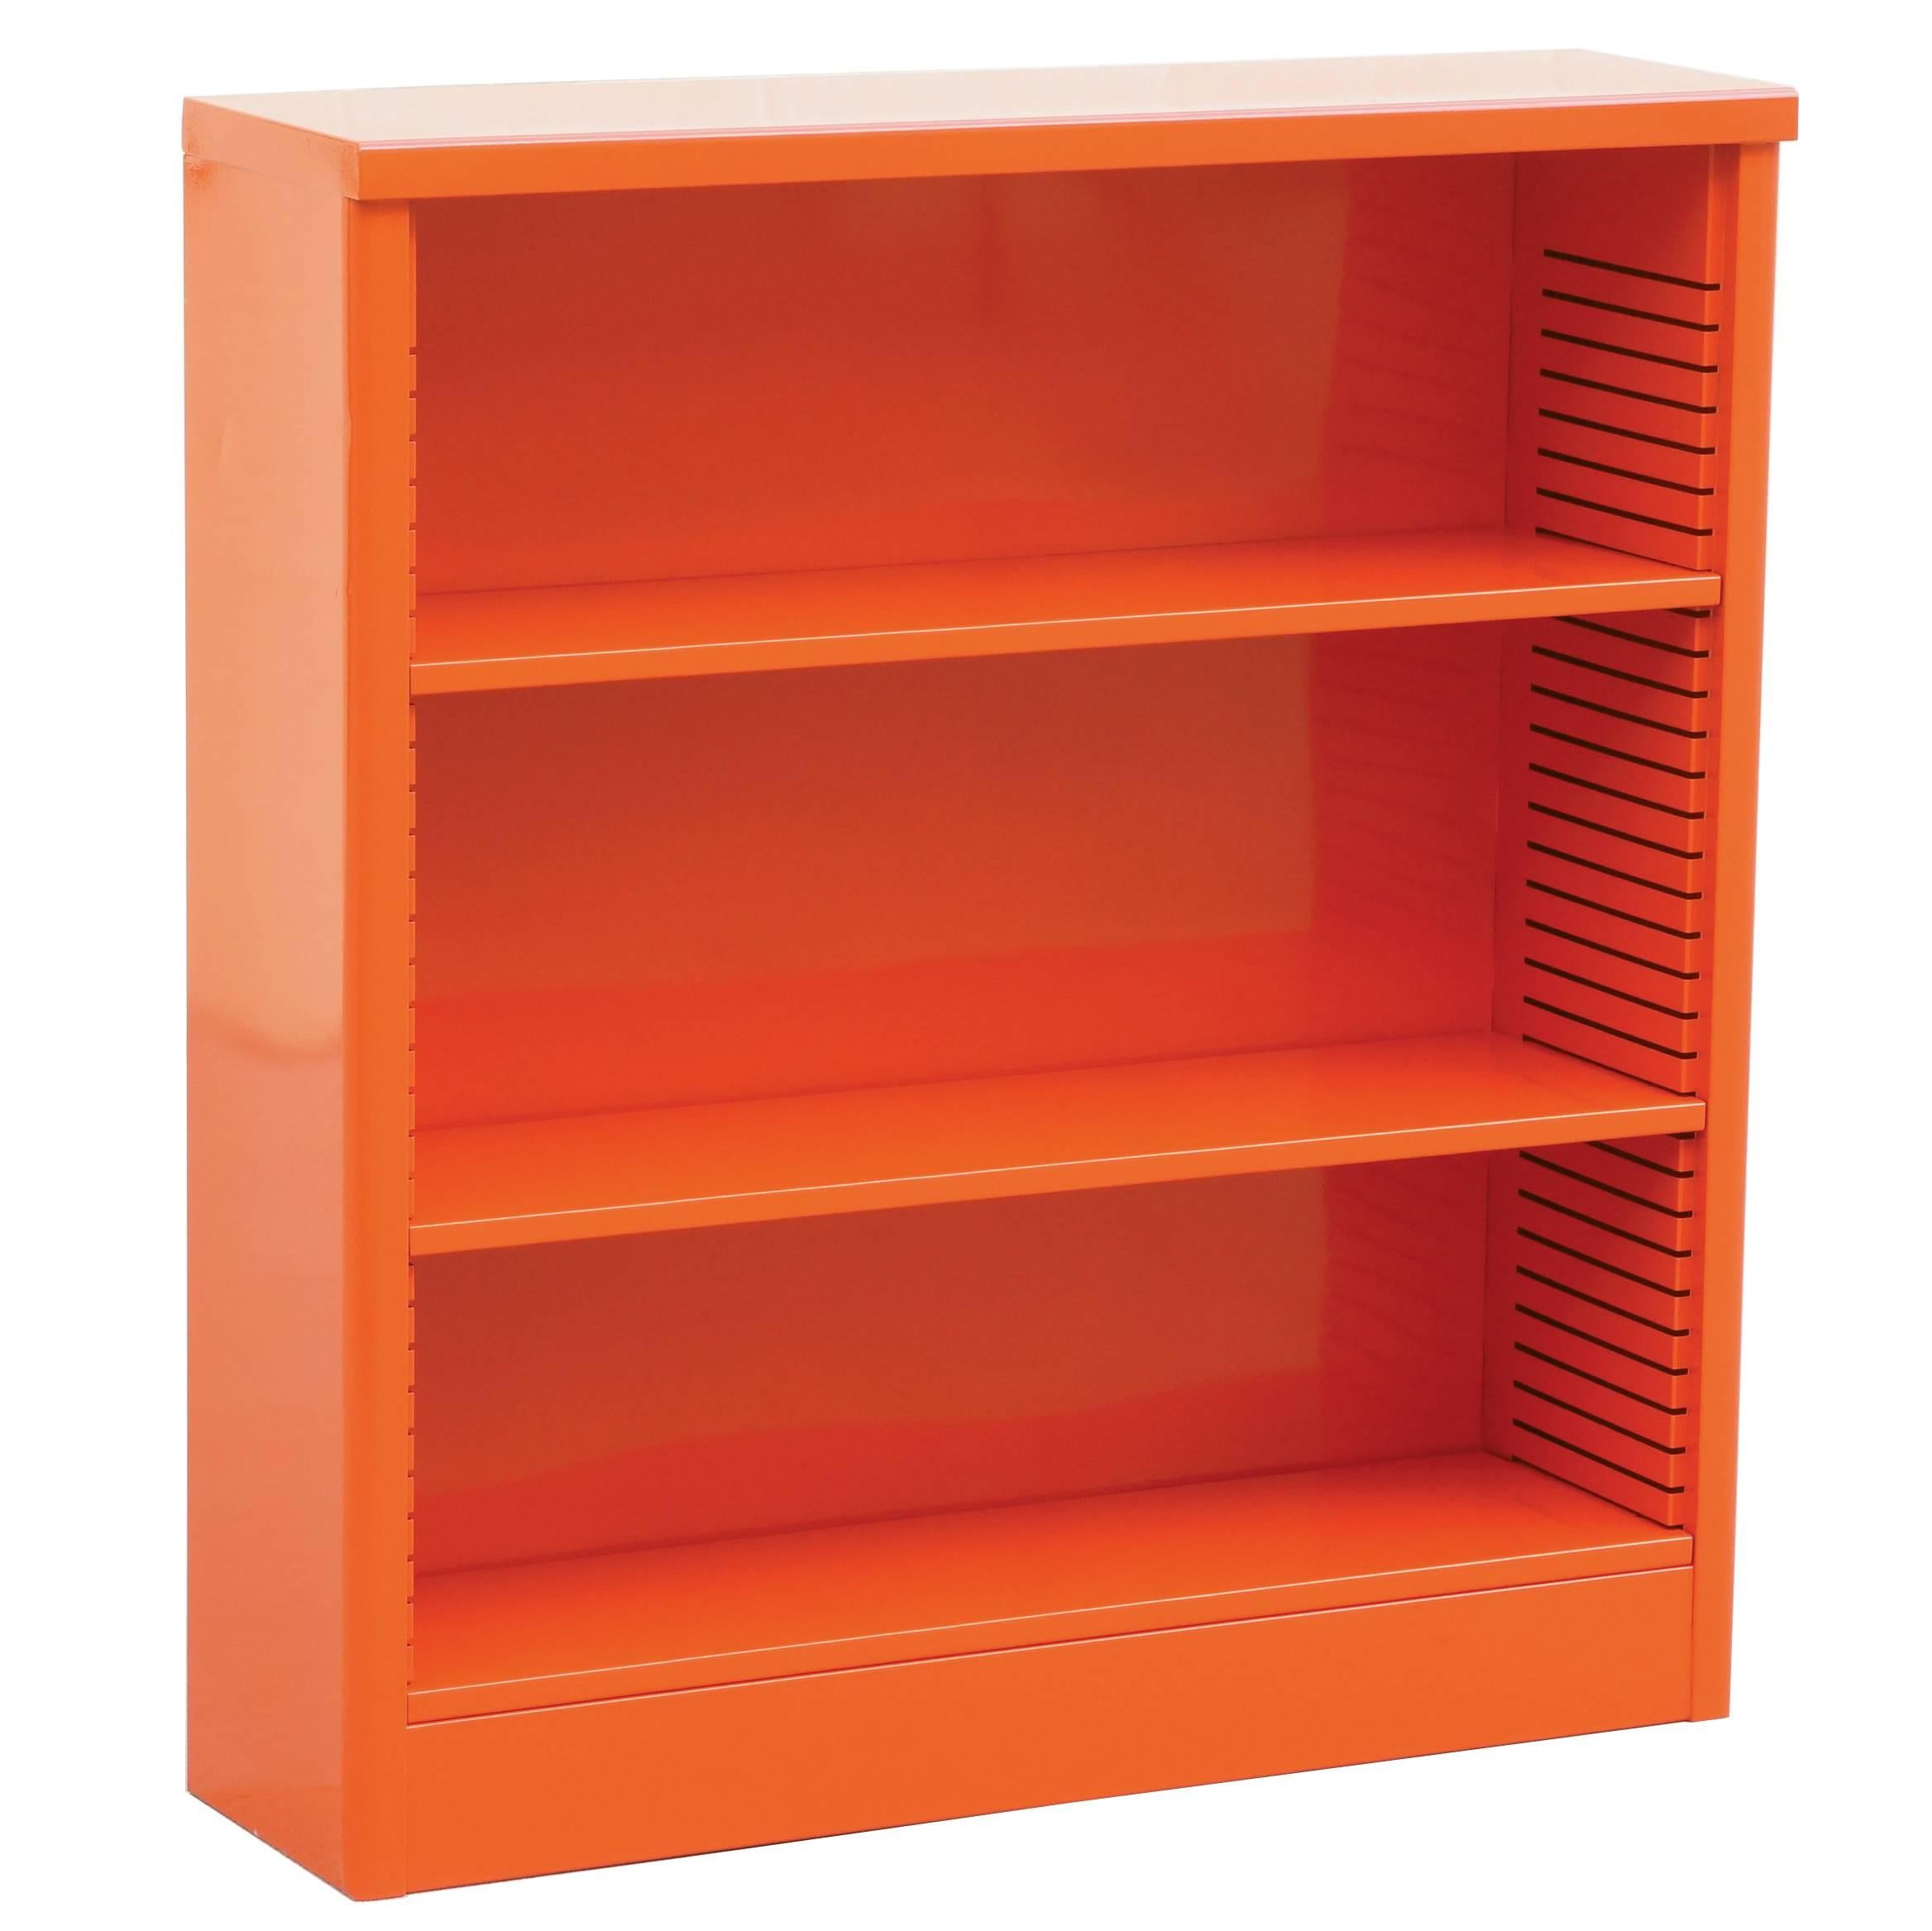 1960s Steel Bookcase in Orange, Custom Refinished